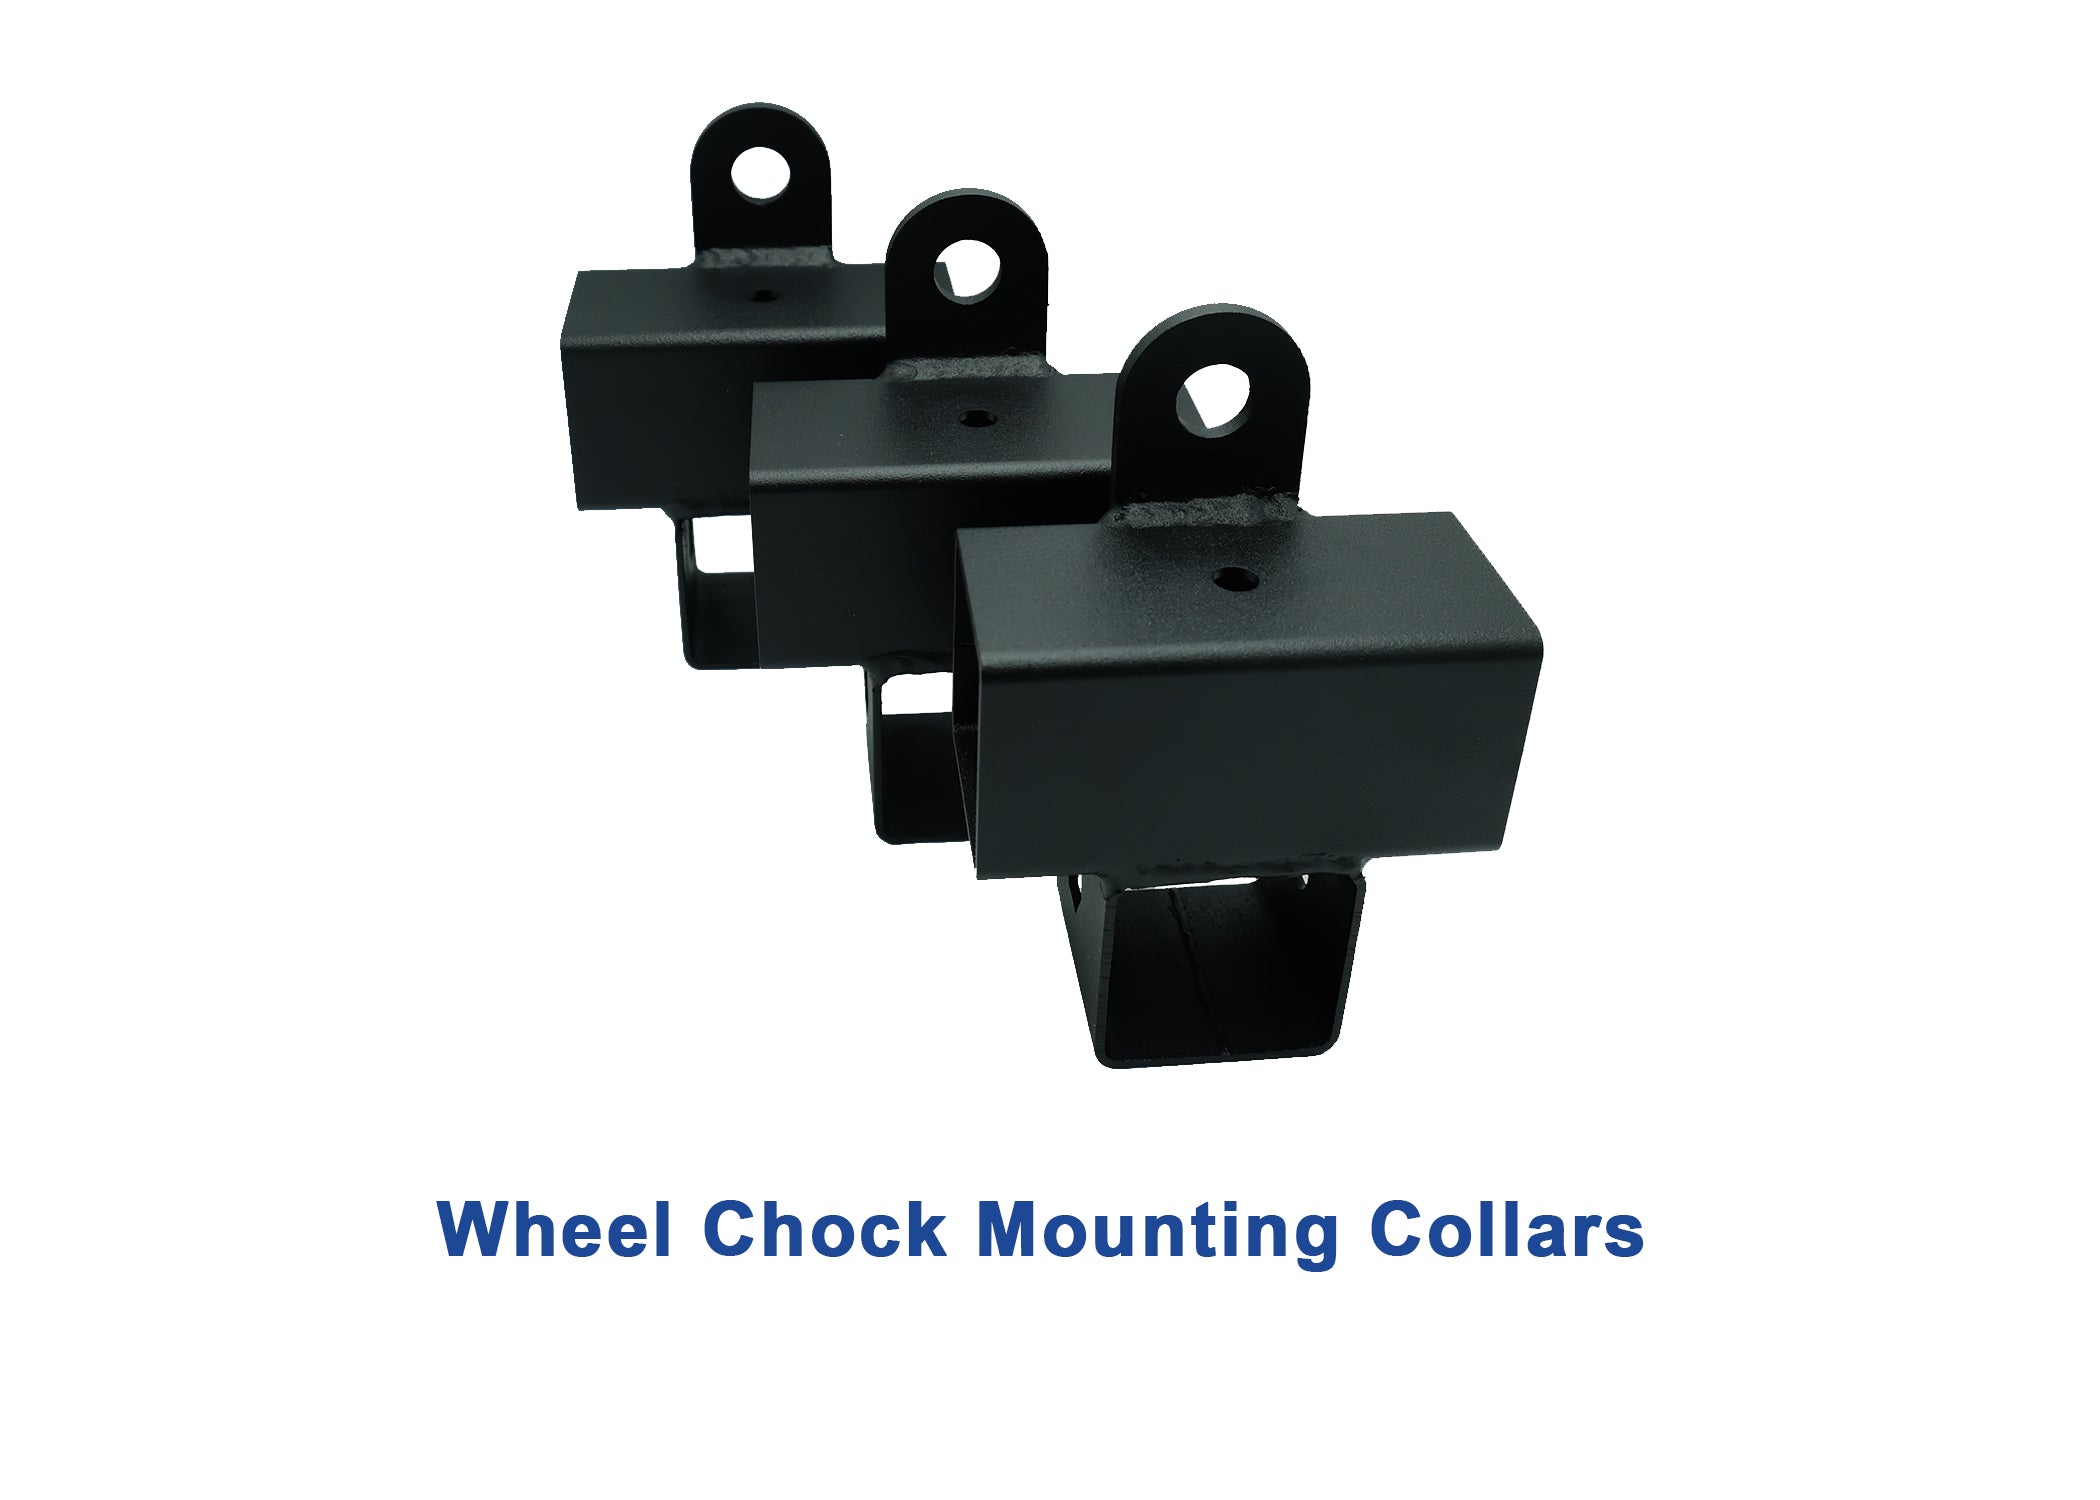 NiceRack Motorcycle Truck Rack | Stake Pocket System